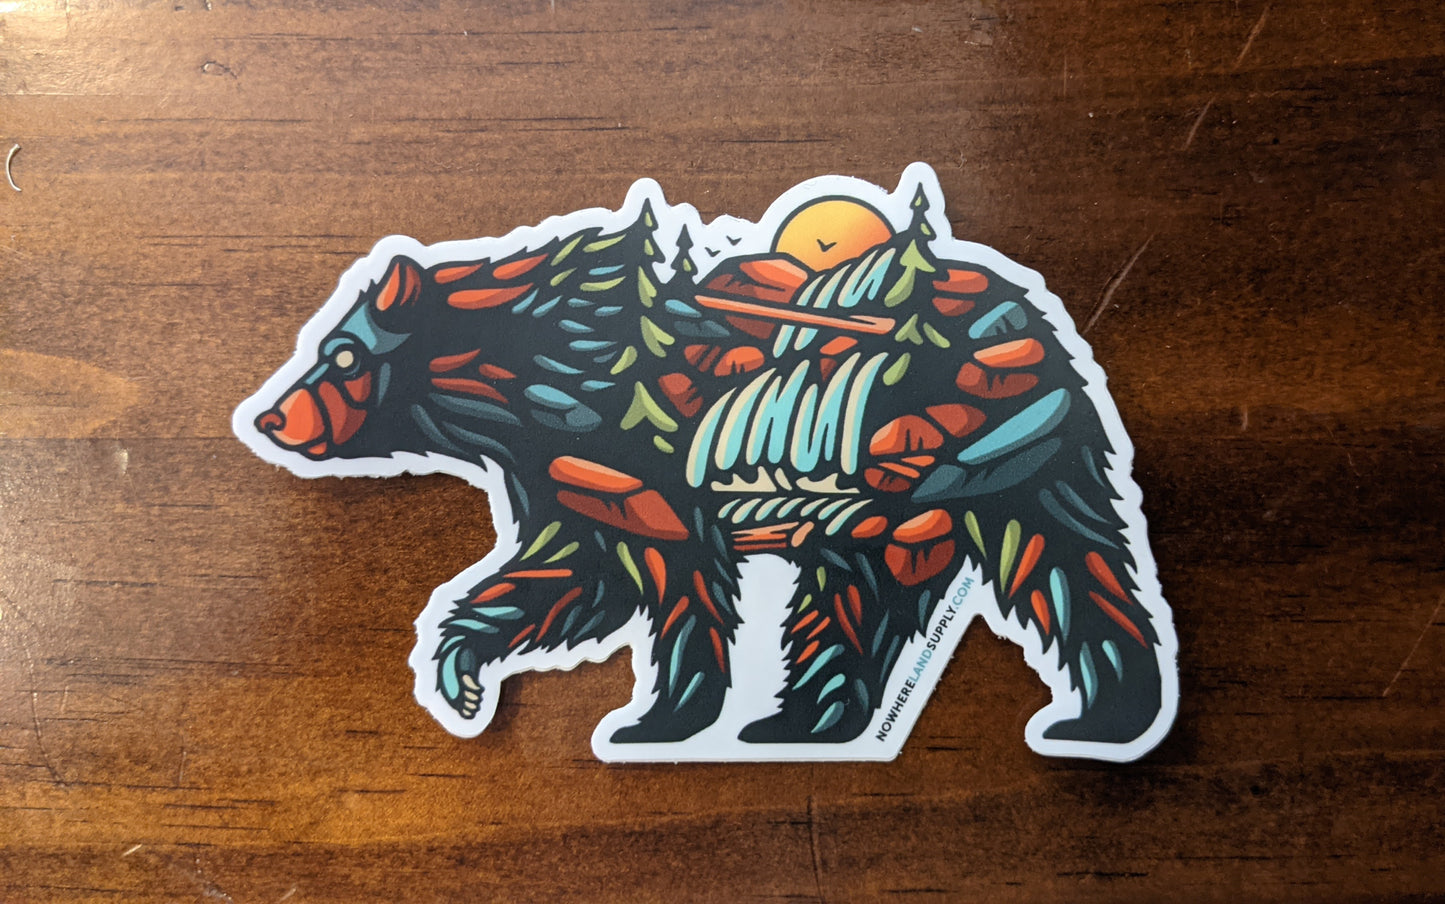 Bear shaped nature scene sticker by Nowhereland